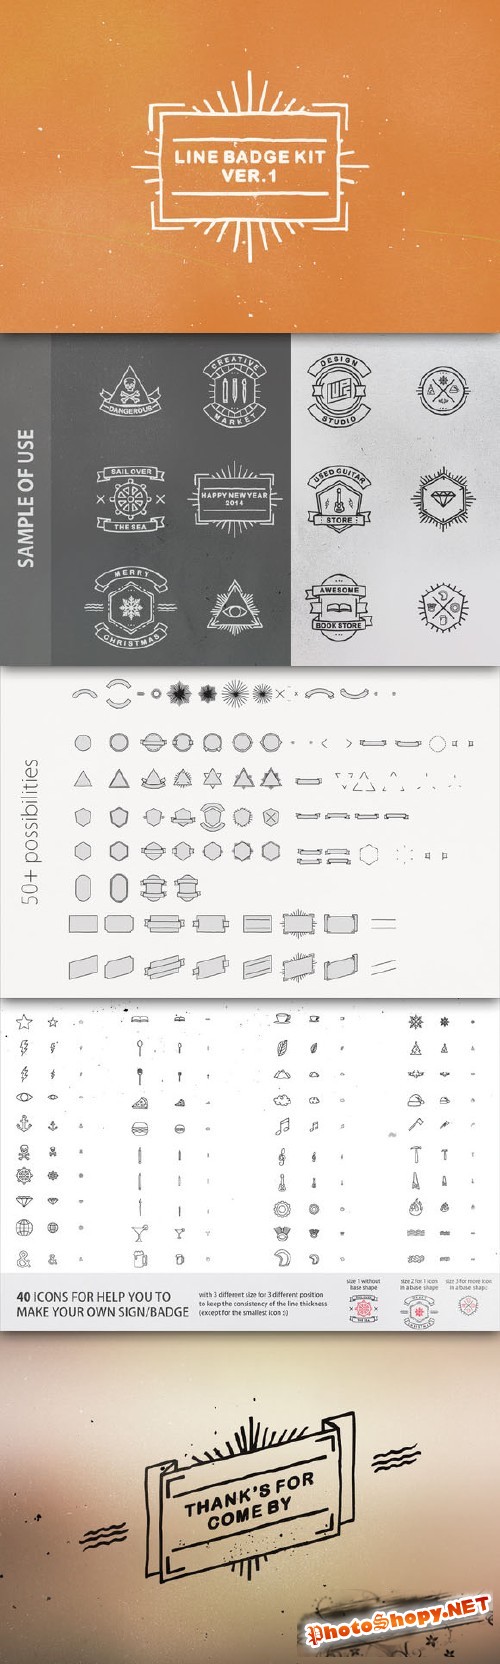 CreativeMarket - Line Badge Kit ver. 1